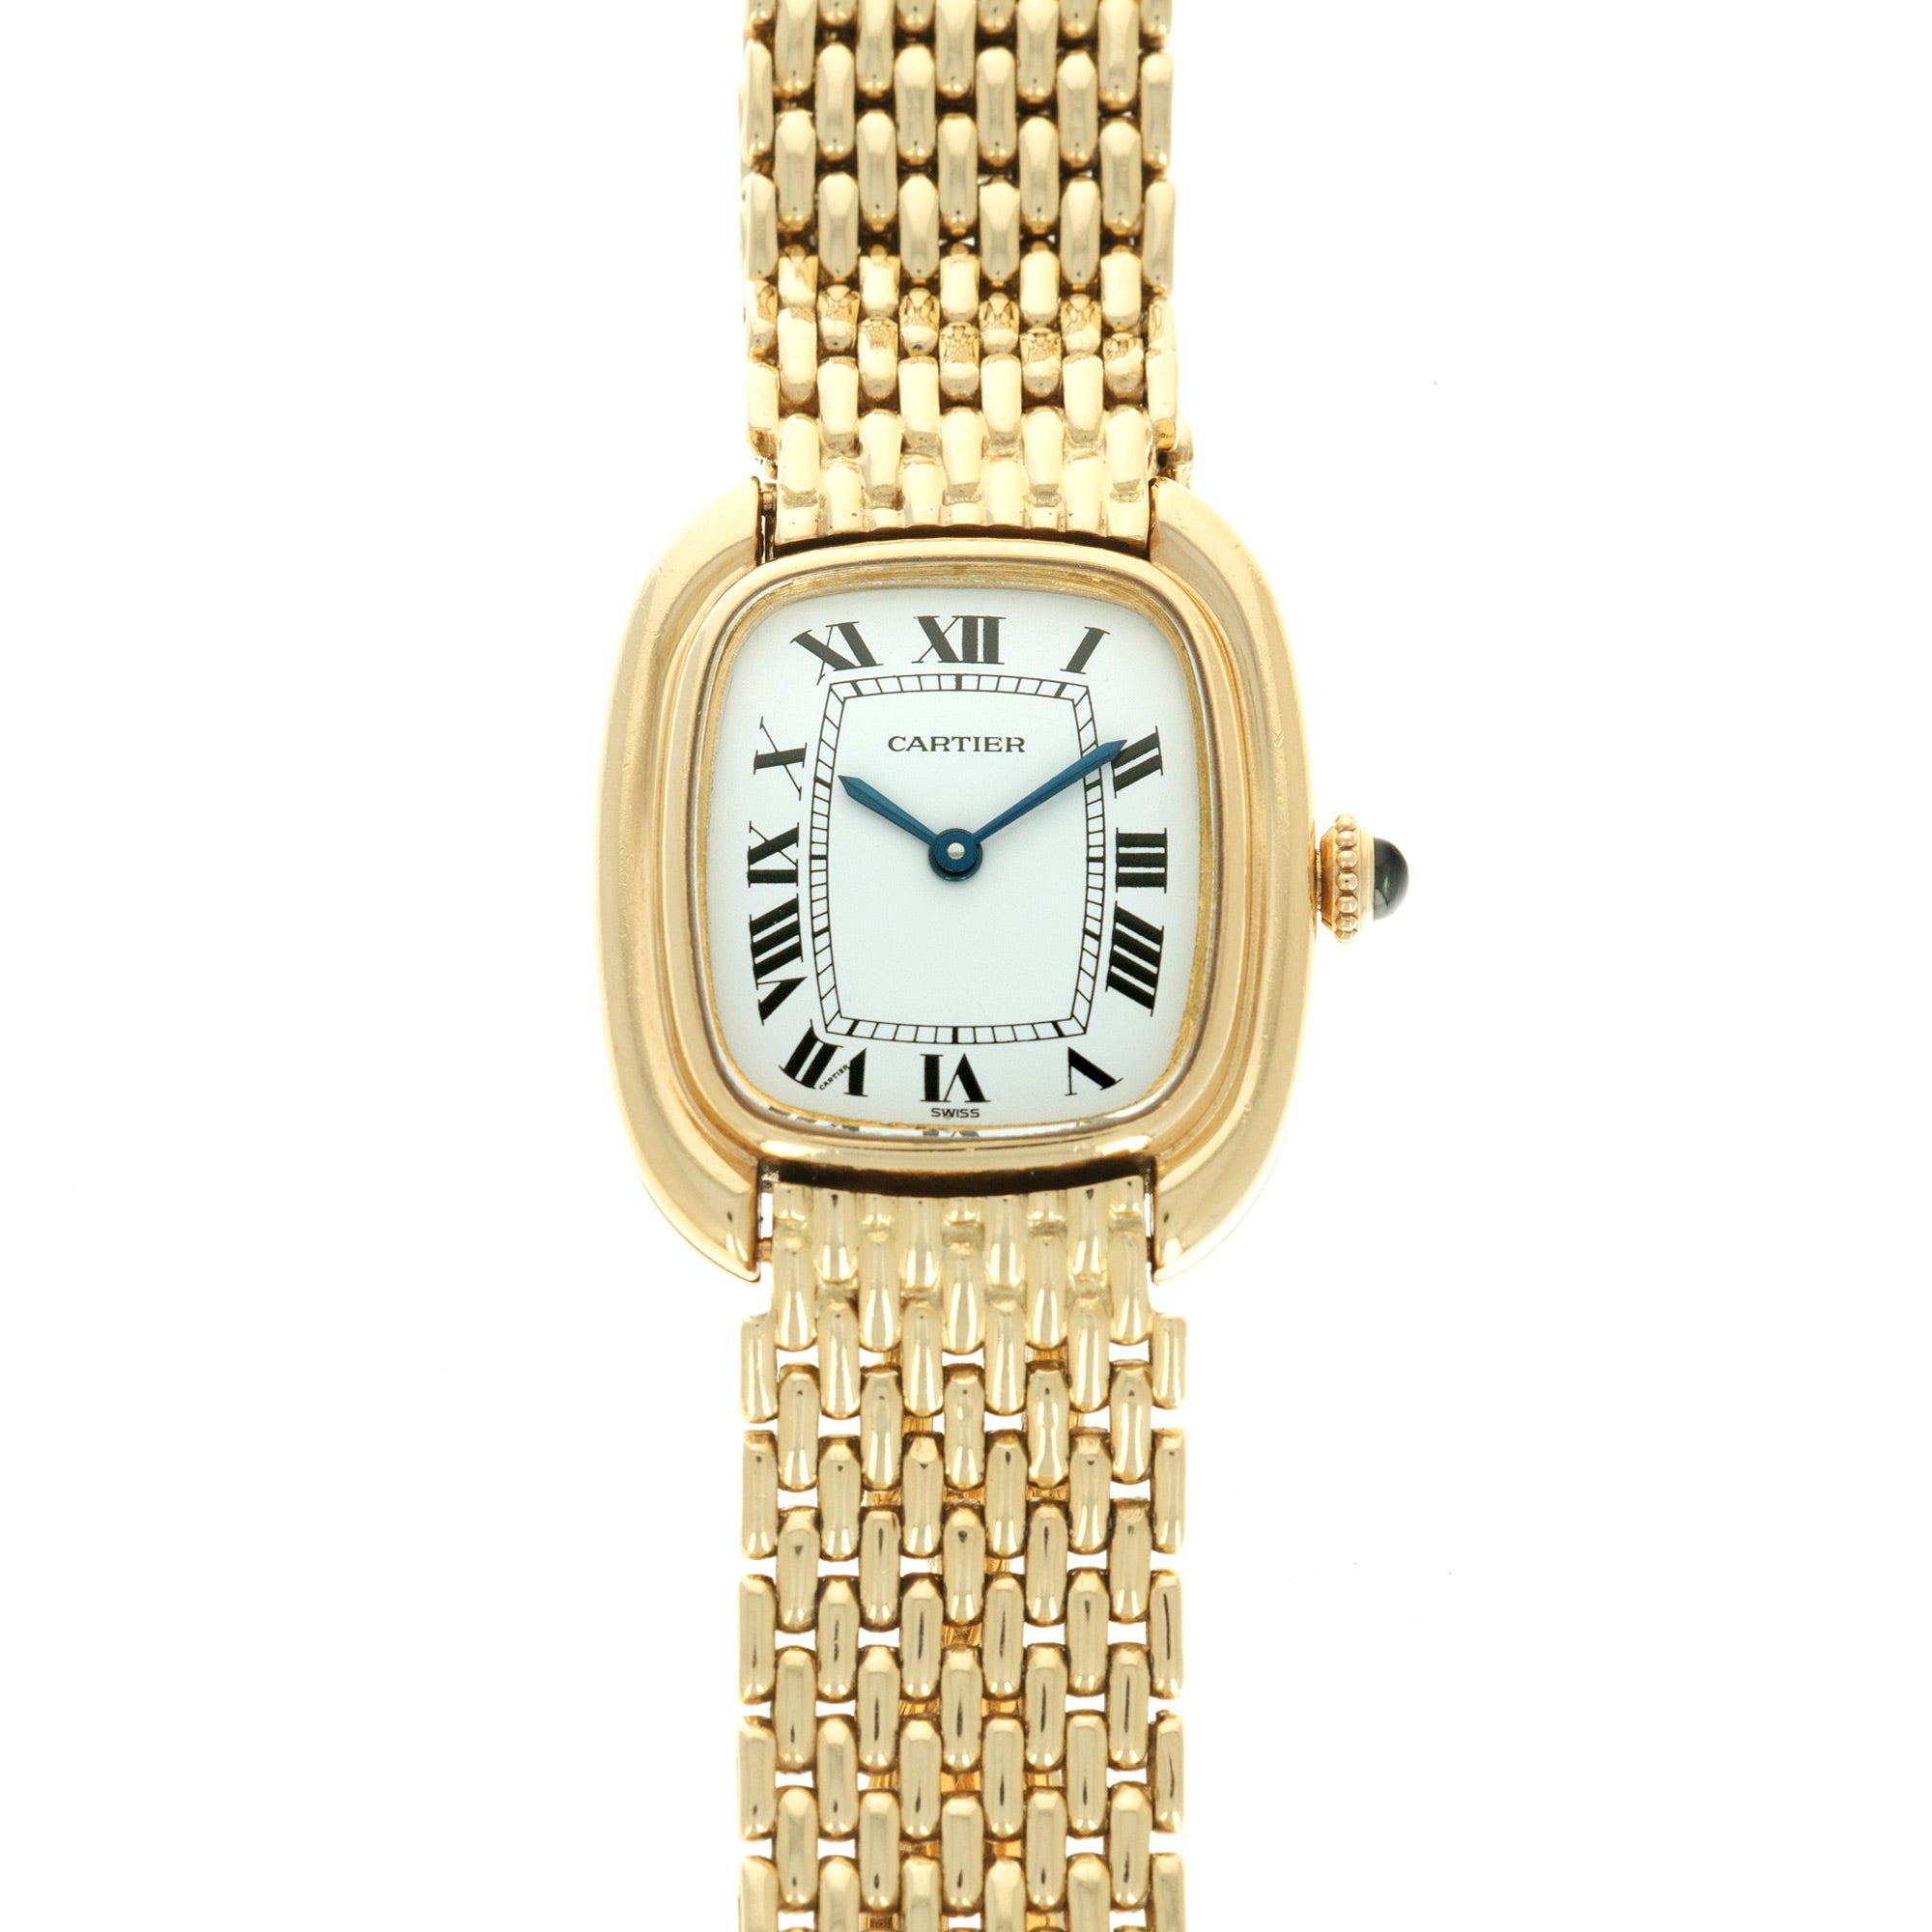 Cartier - Cartier Yellow Gold Tank Gondole Bracelet Watch - The Keystone Watches